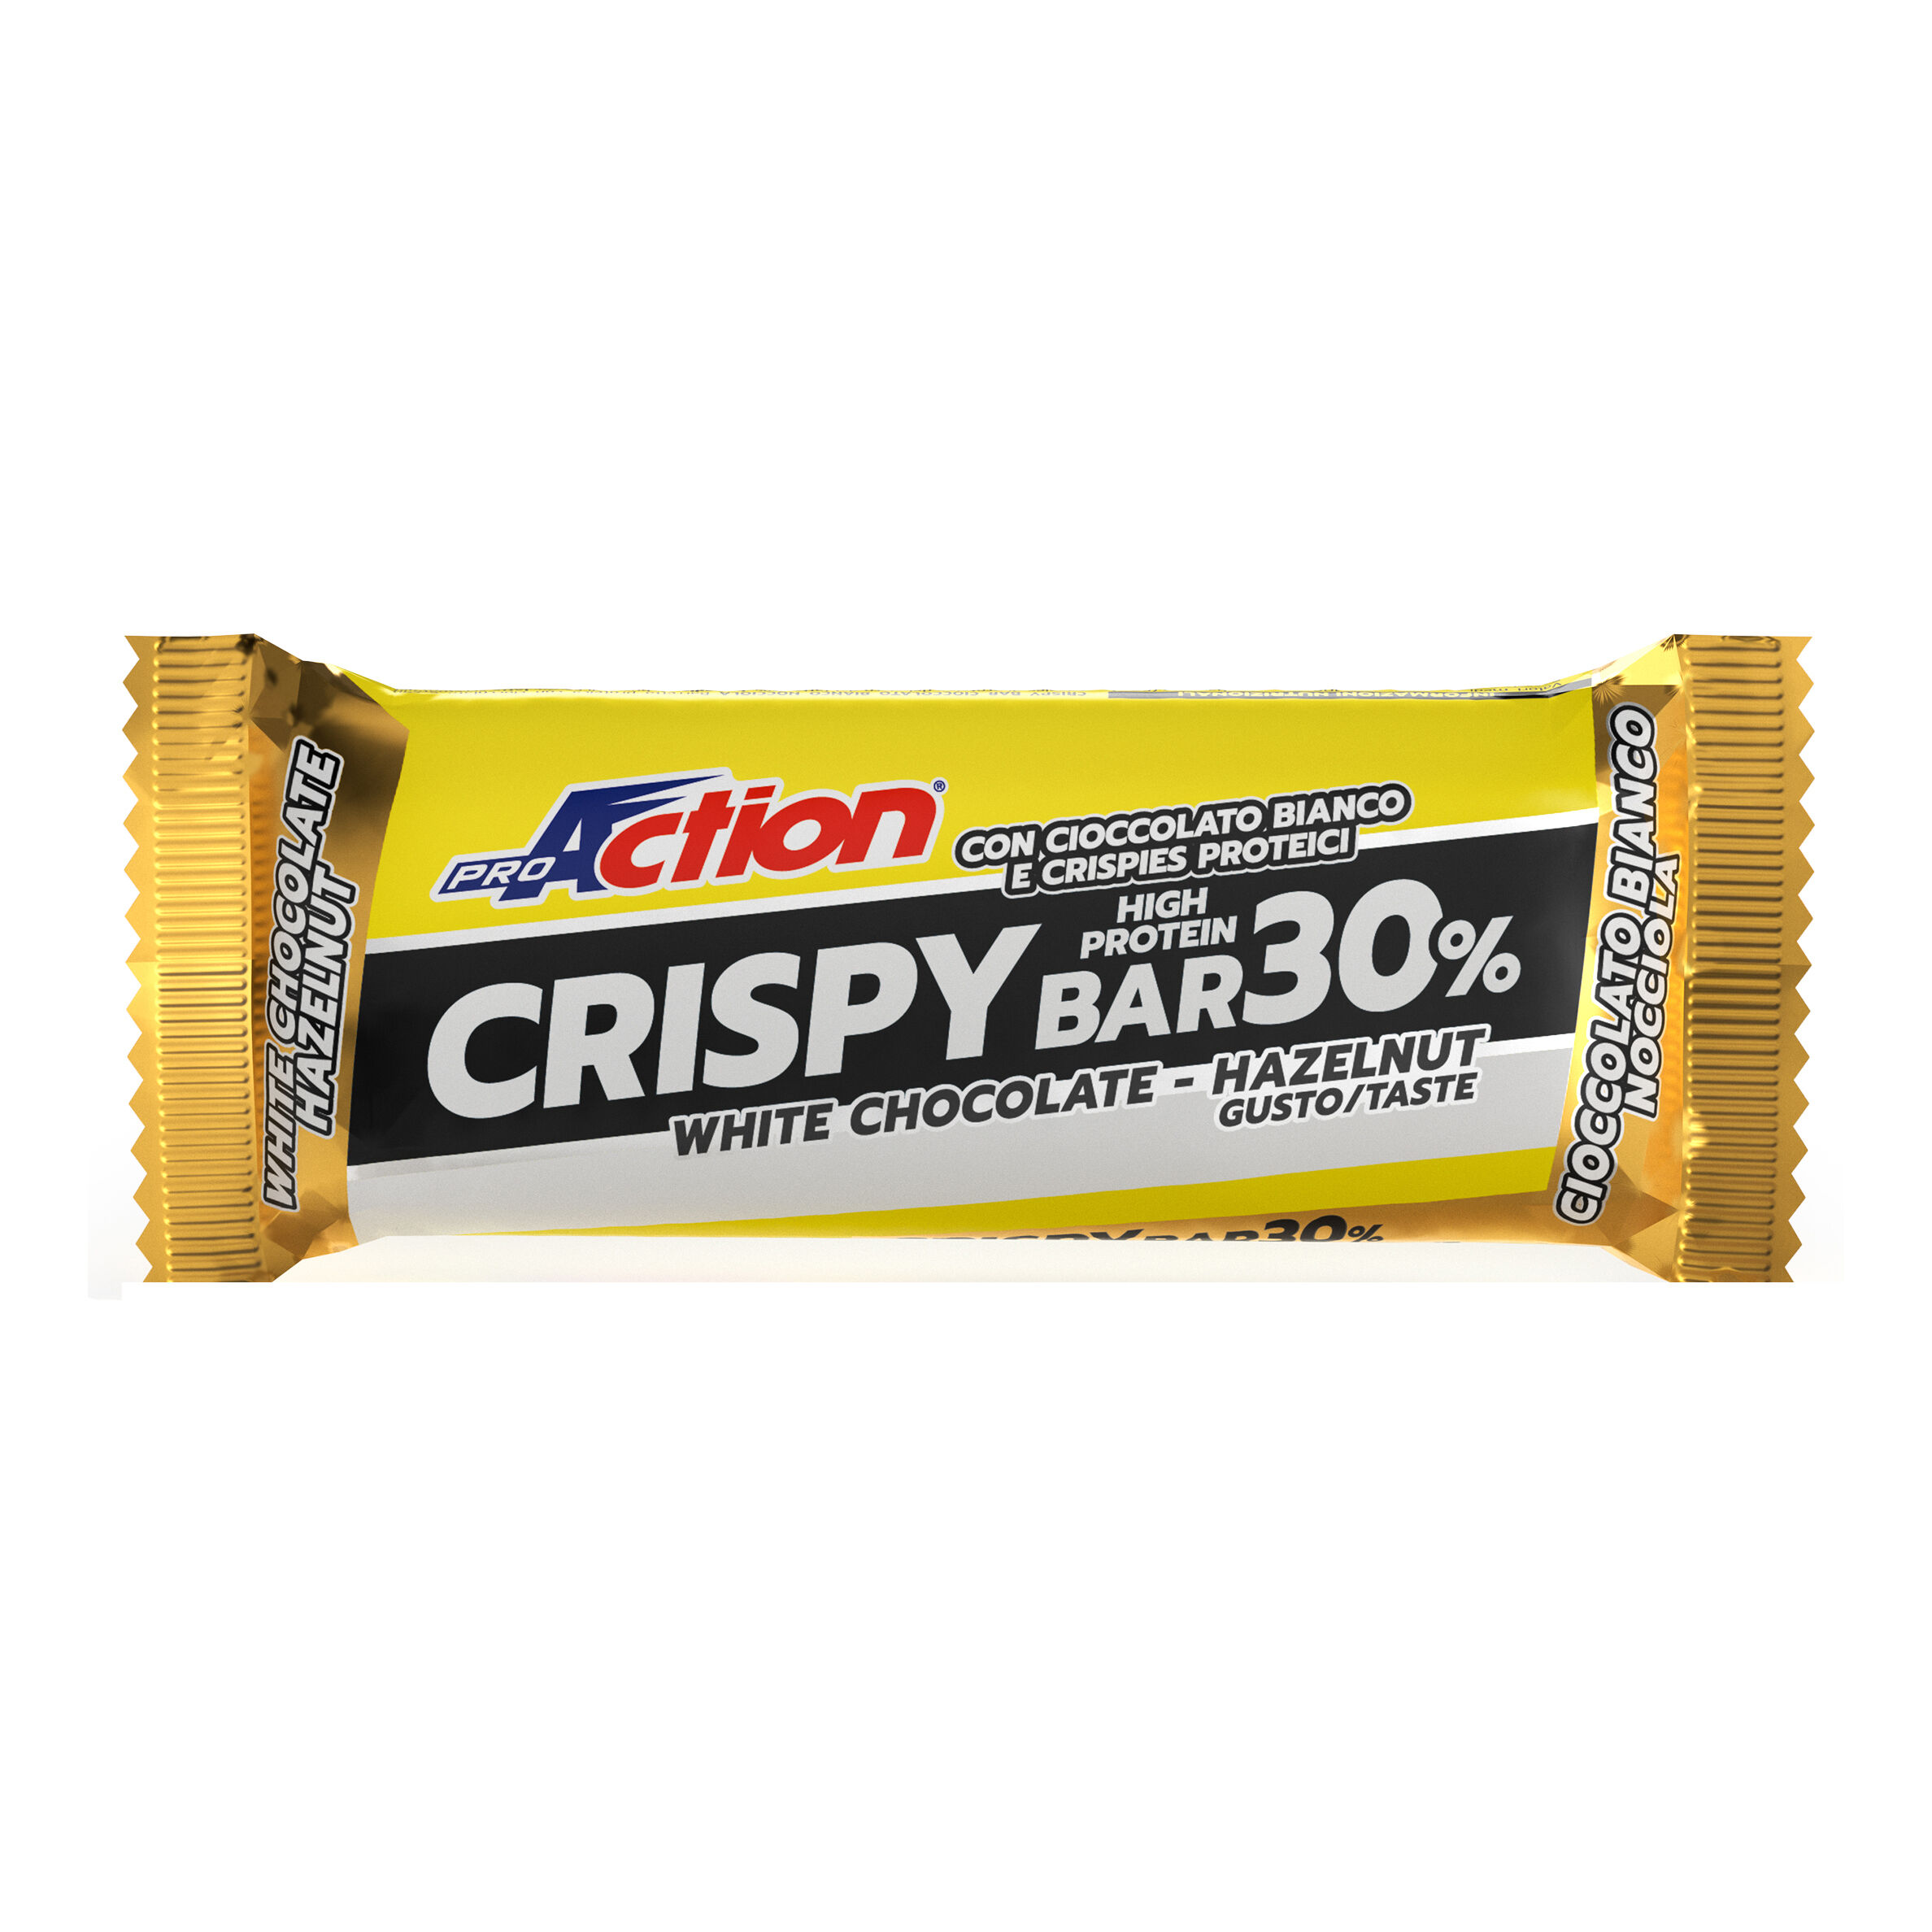 ProAction crispy bar white chocolate 50 g